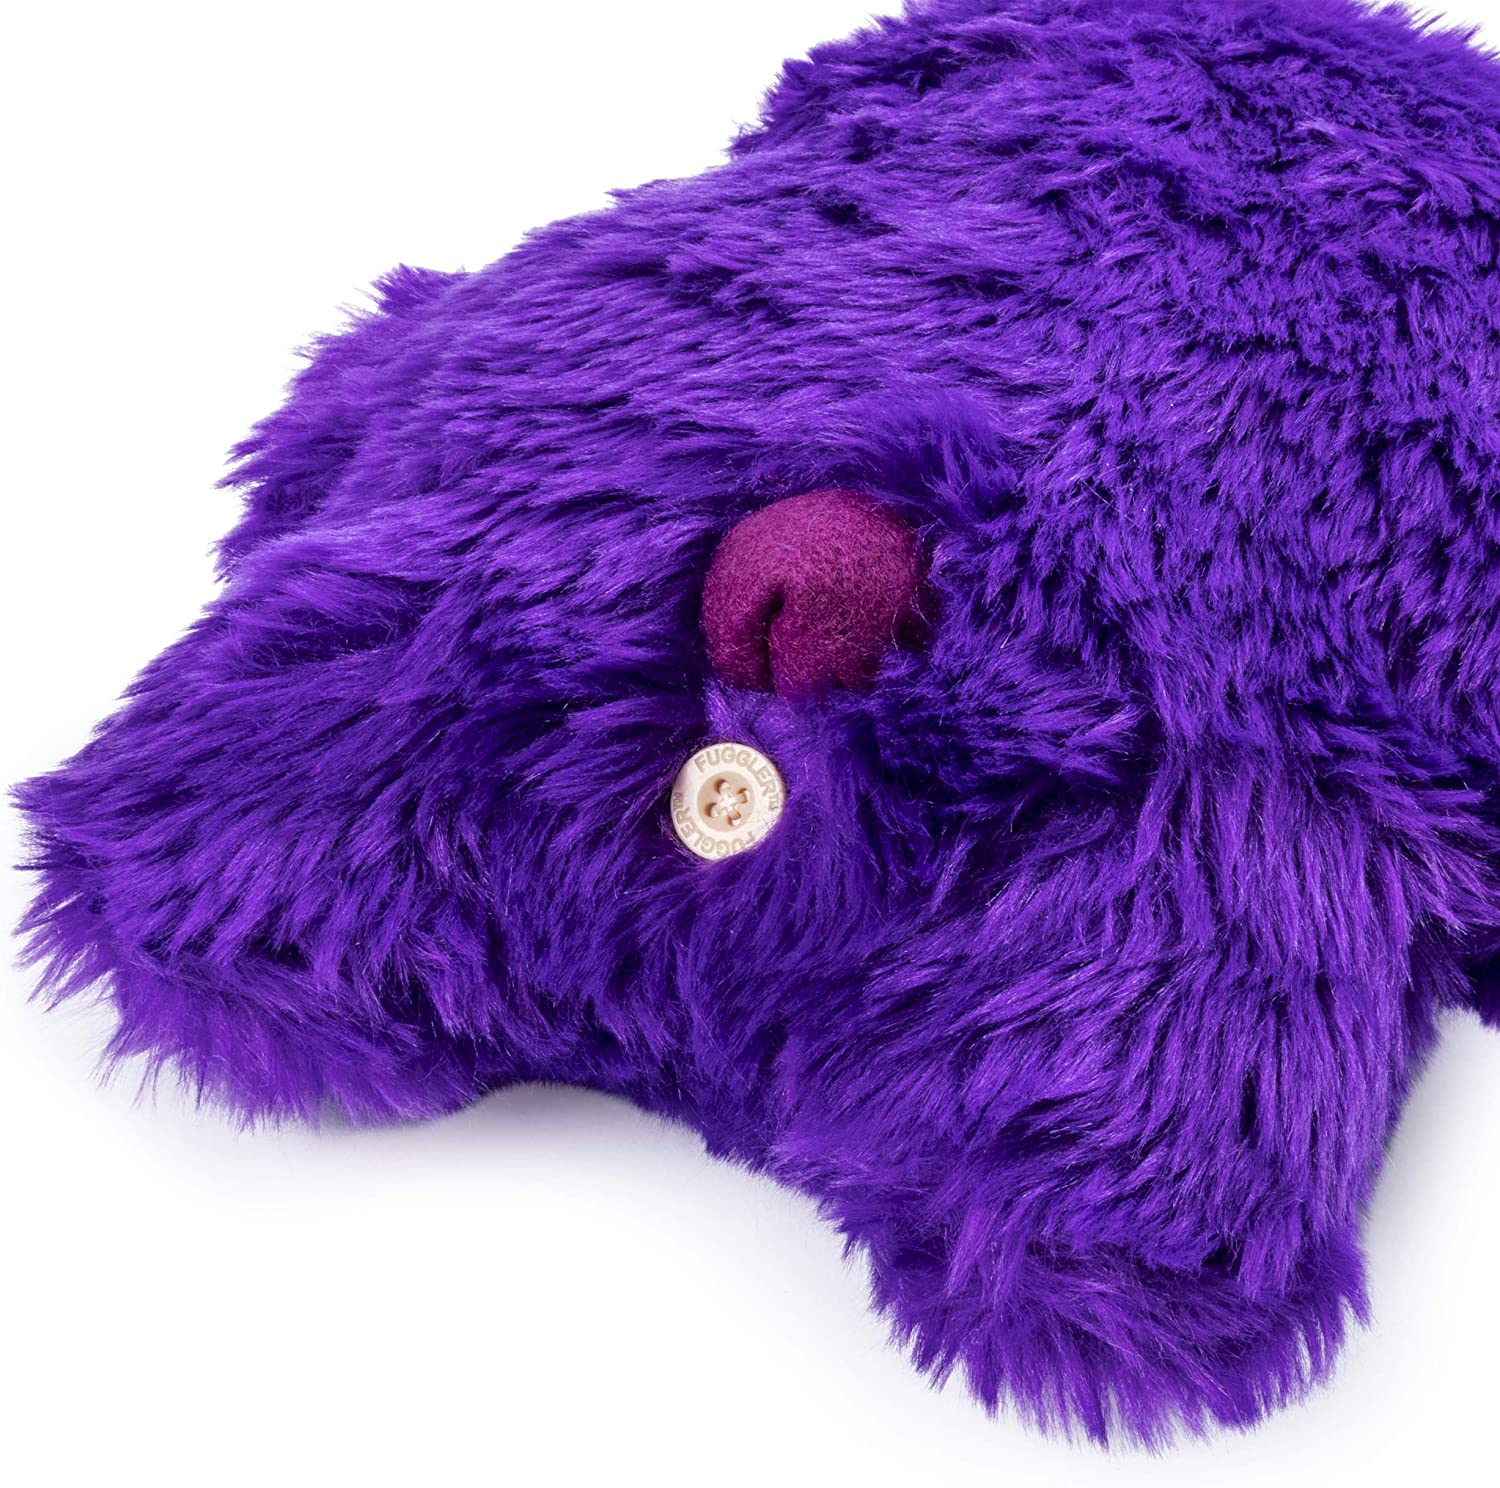 Fuggler 22cm Funny Ugly Monster – Rabid Rabbit (Purple Fur) – TopToy